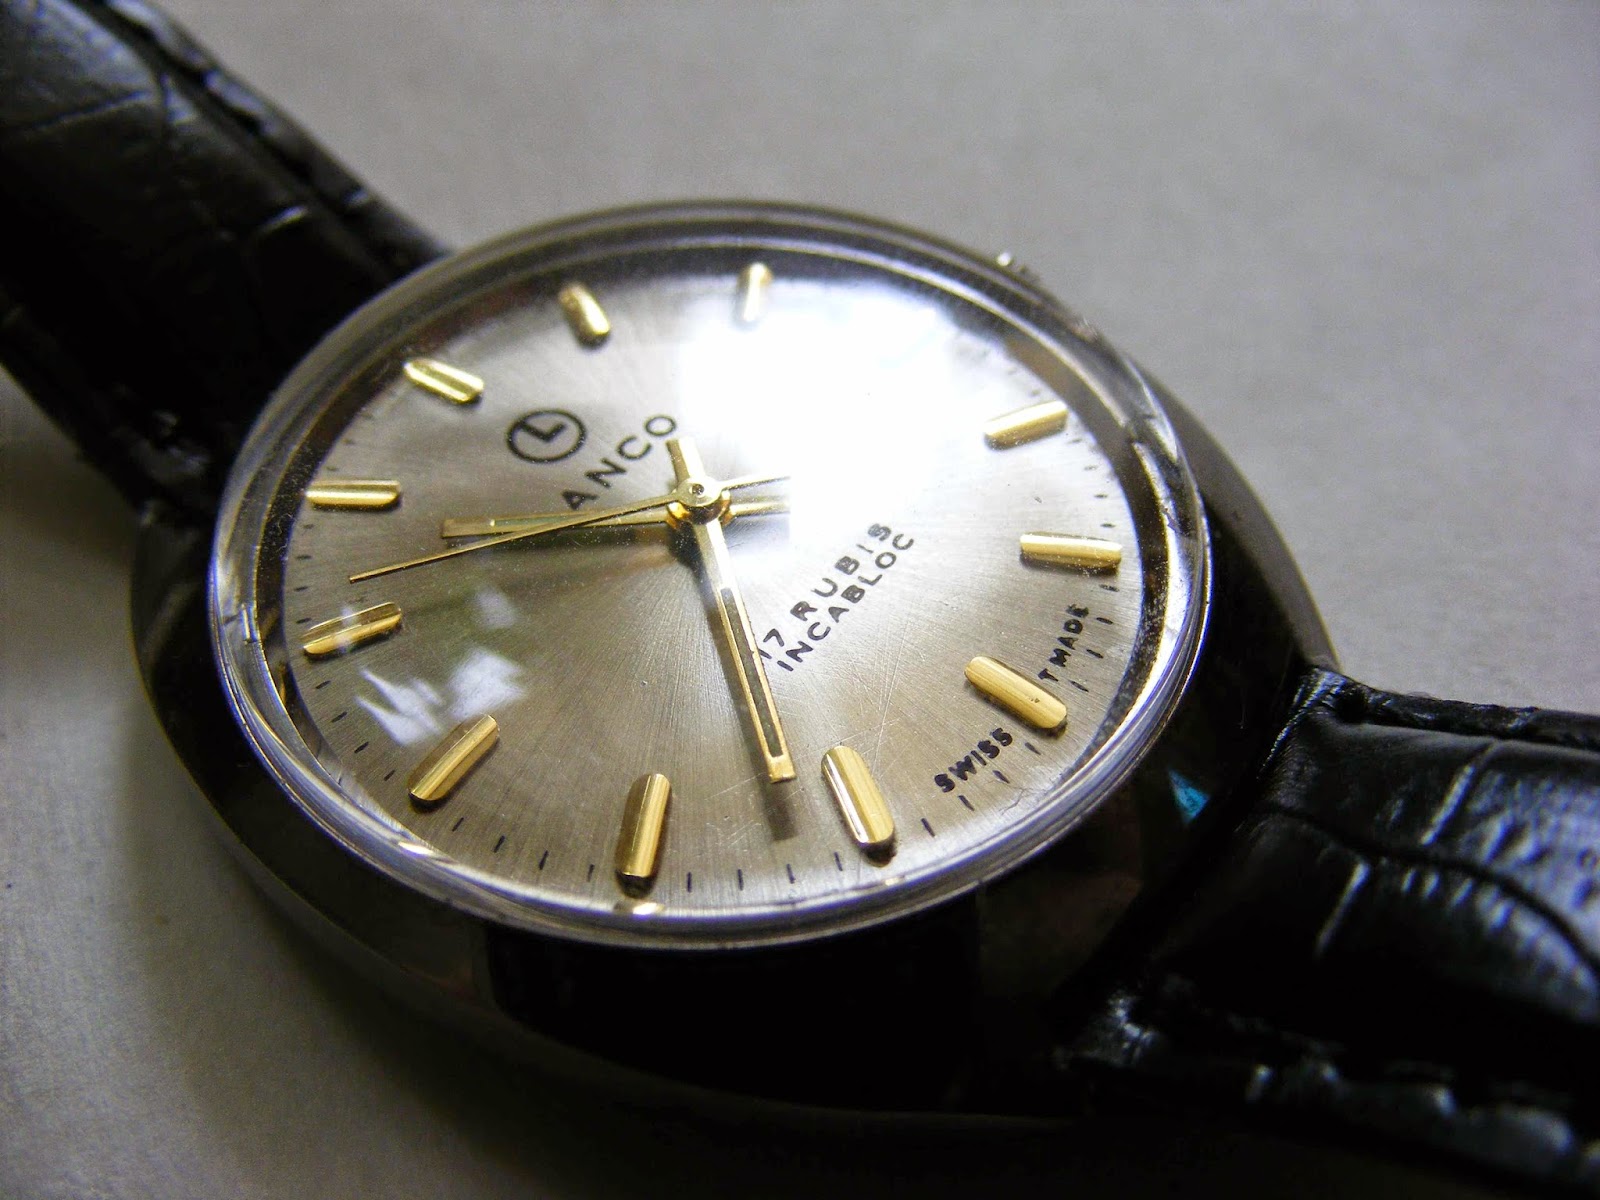 17 RUBIES INCABLOC, handwind lanco mechanical vintage wrist watch